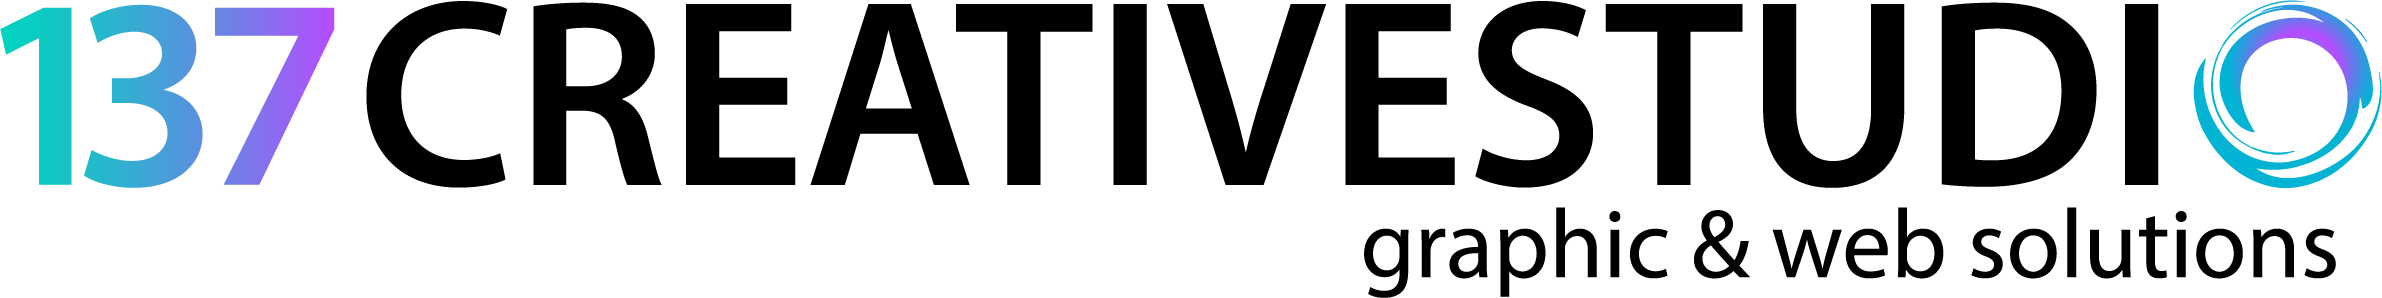 retina pro logo